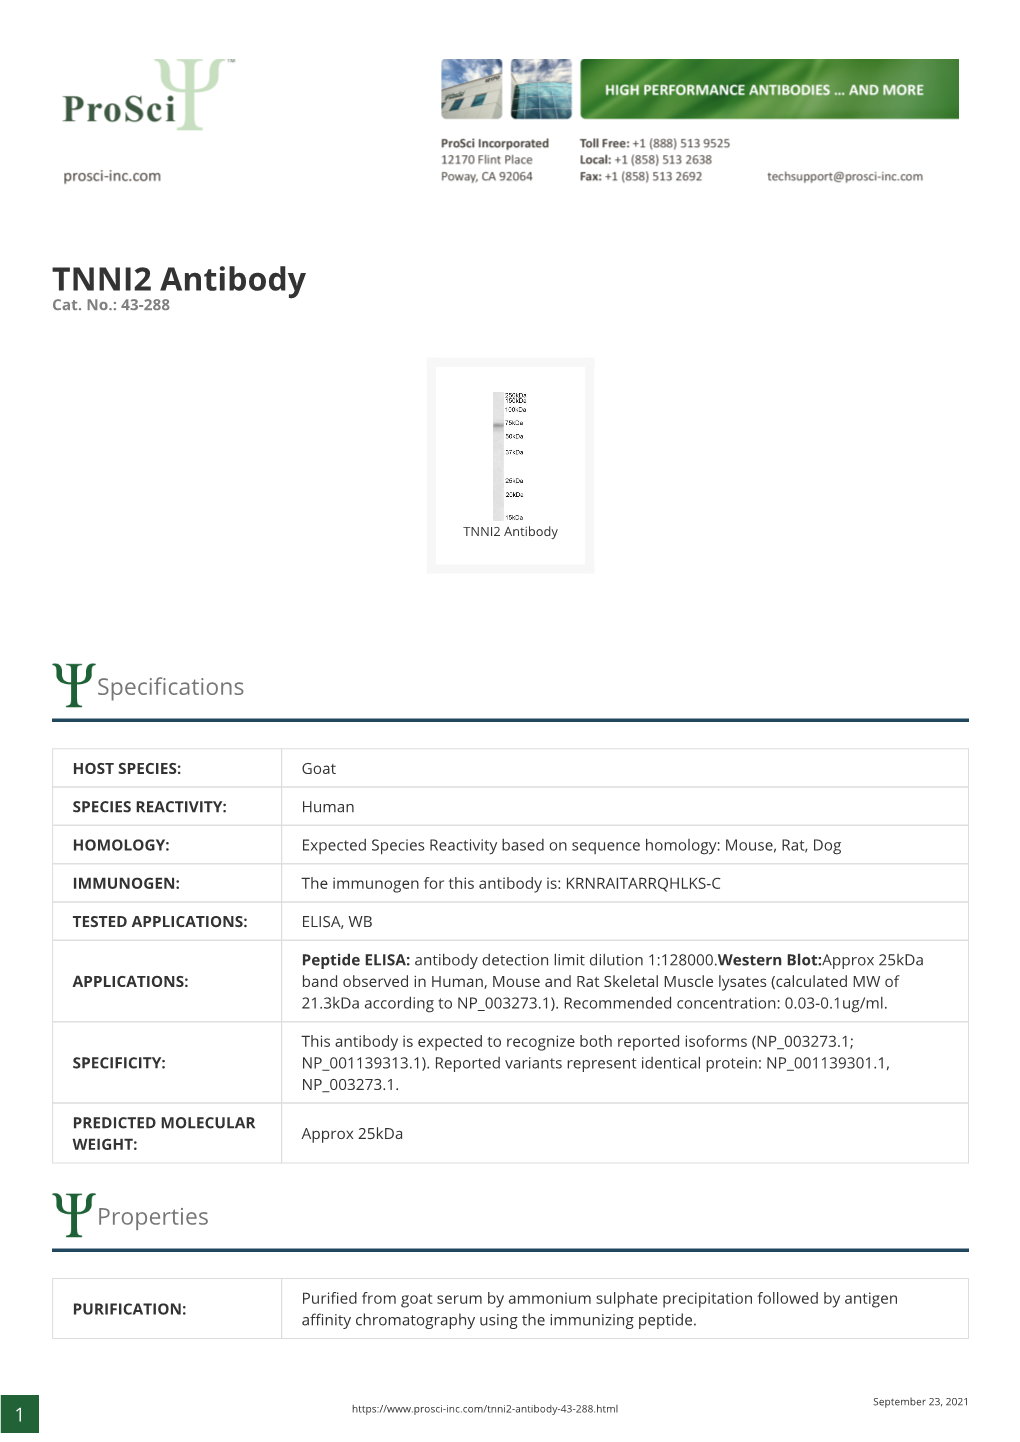 TNNI2 Antibody Cat